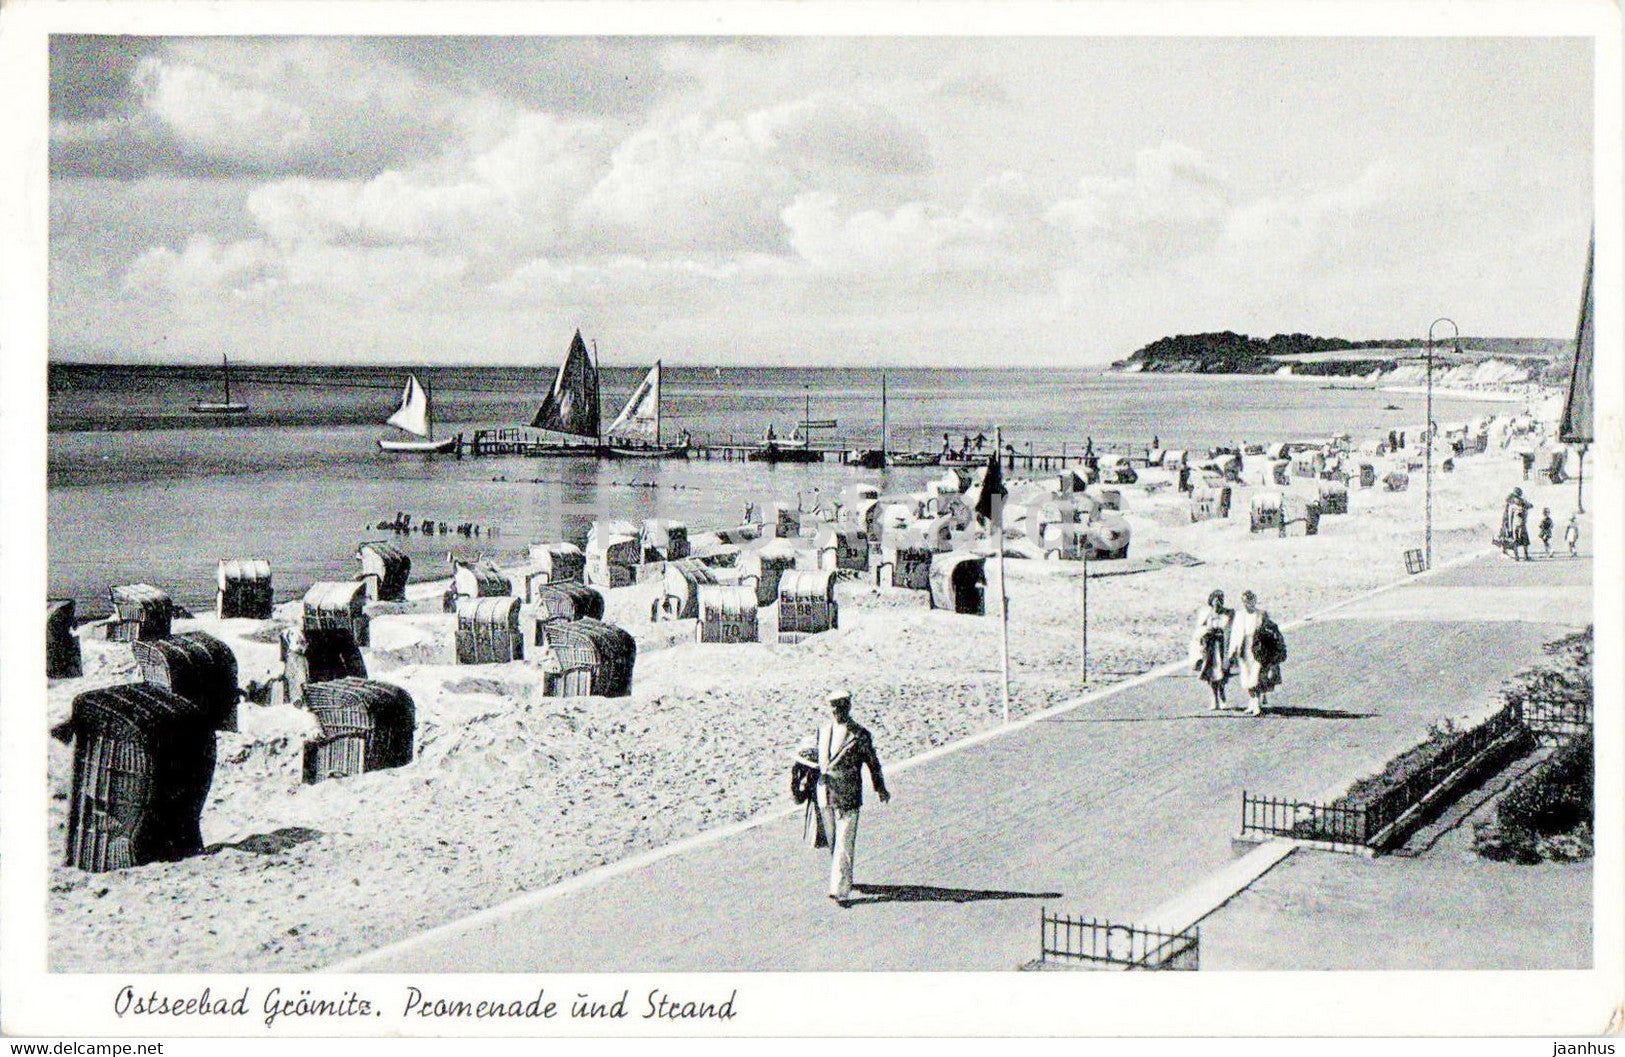 Ostseebad Gromitz - Promenade und Strand - beach - old postcard - 1954 - Germany - used - JH Postcards